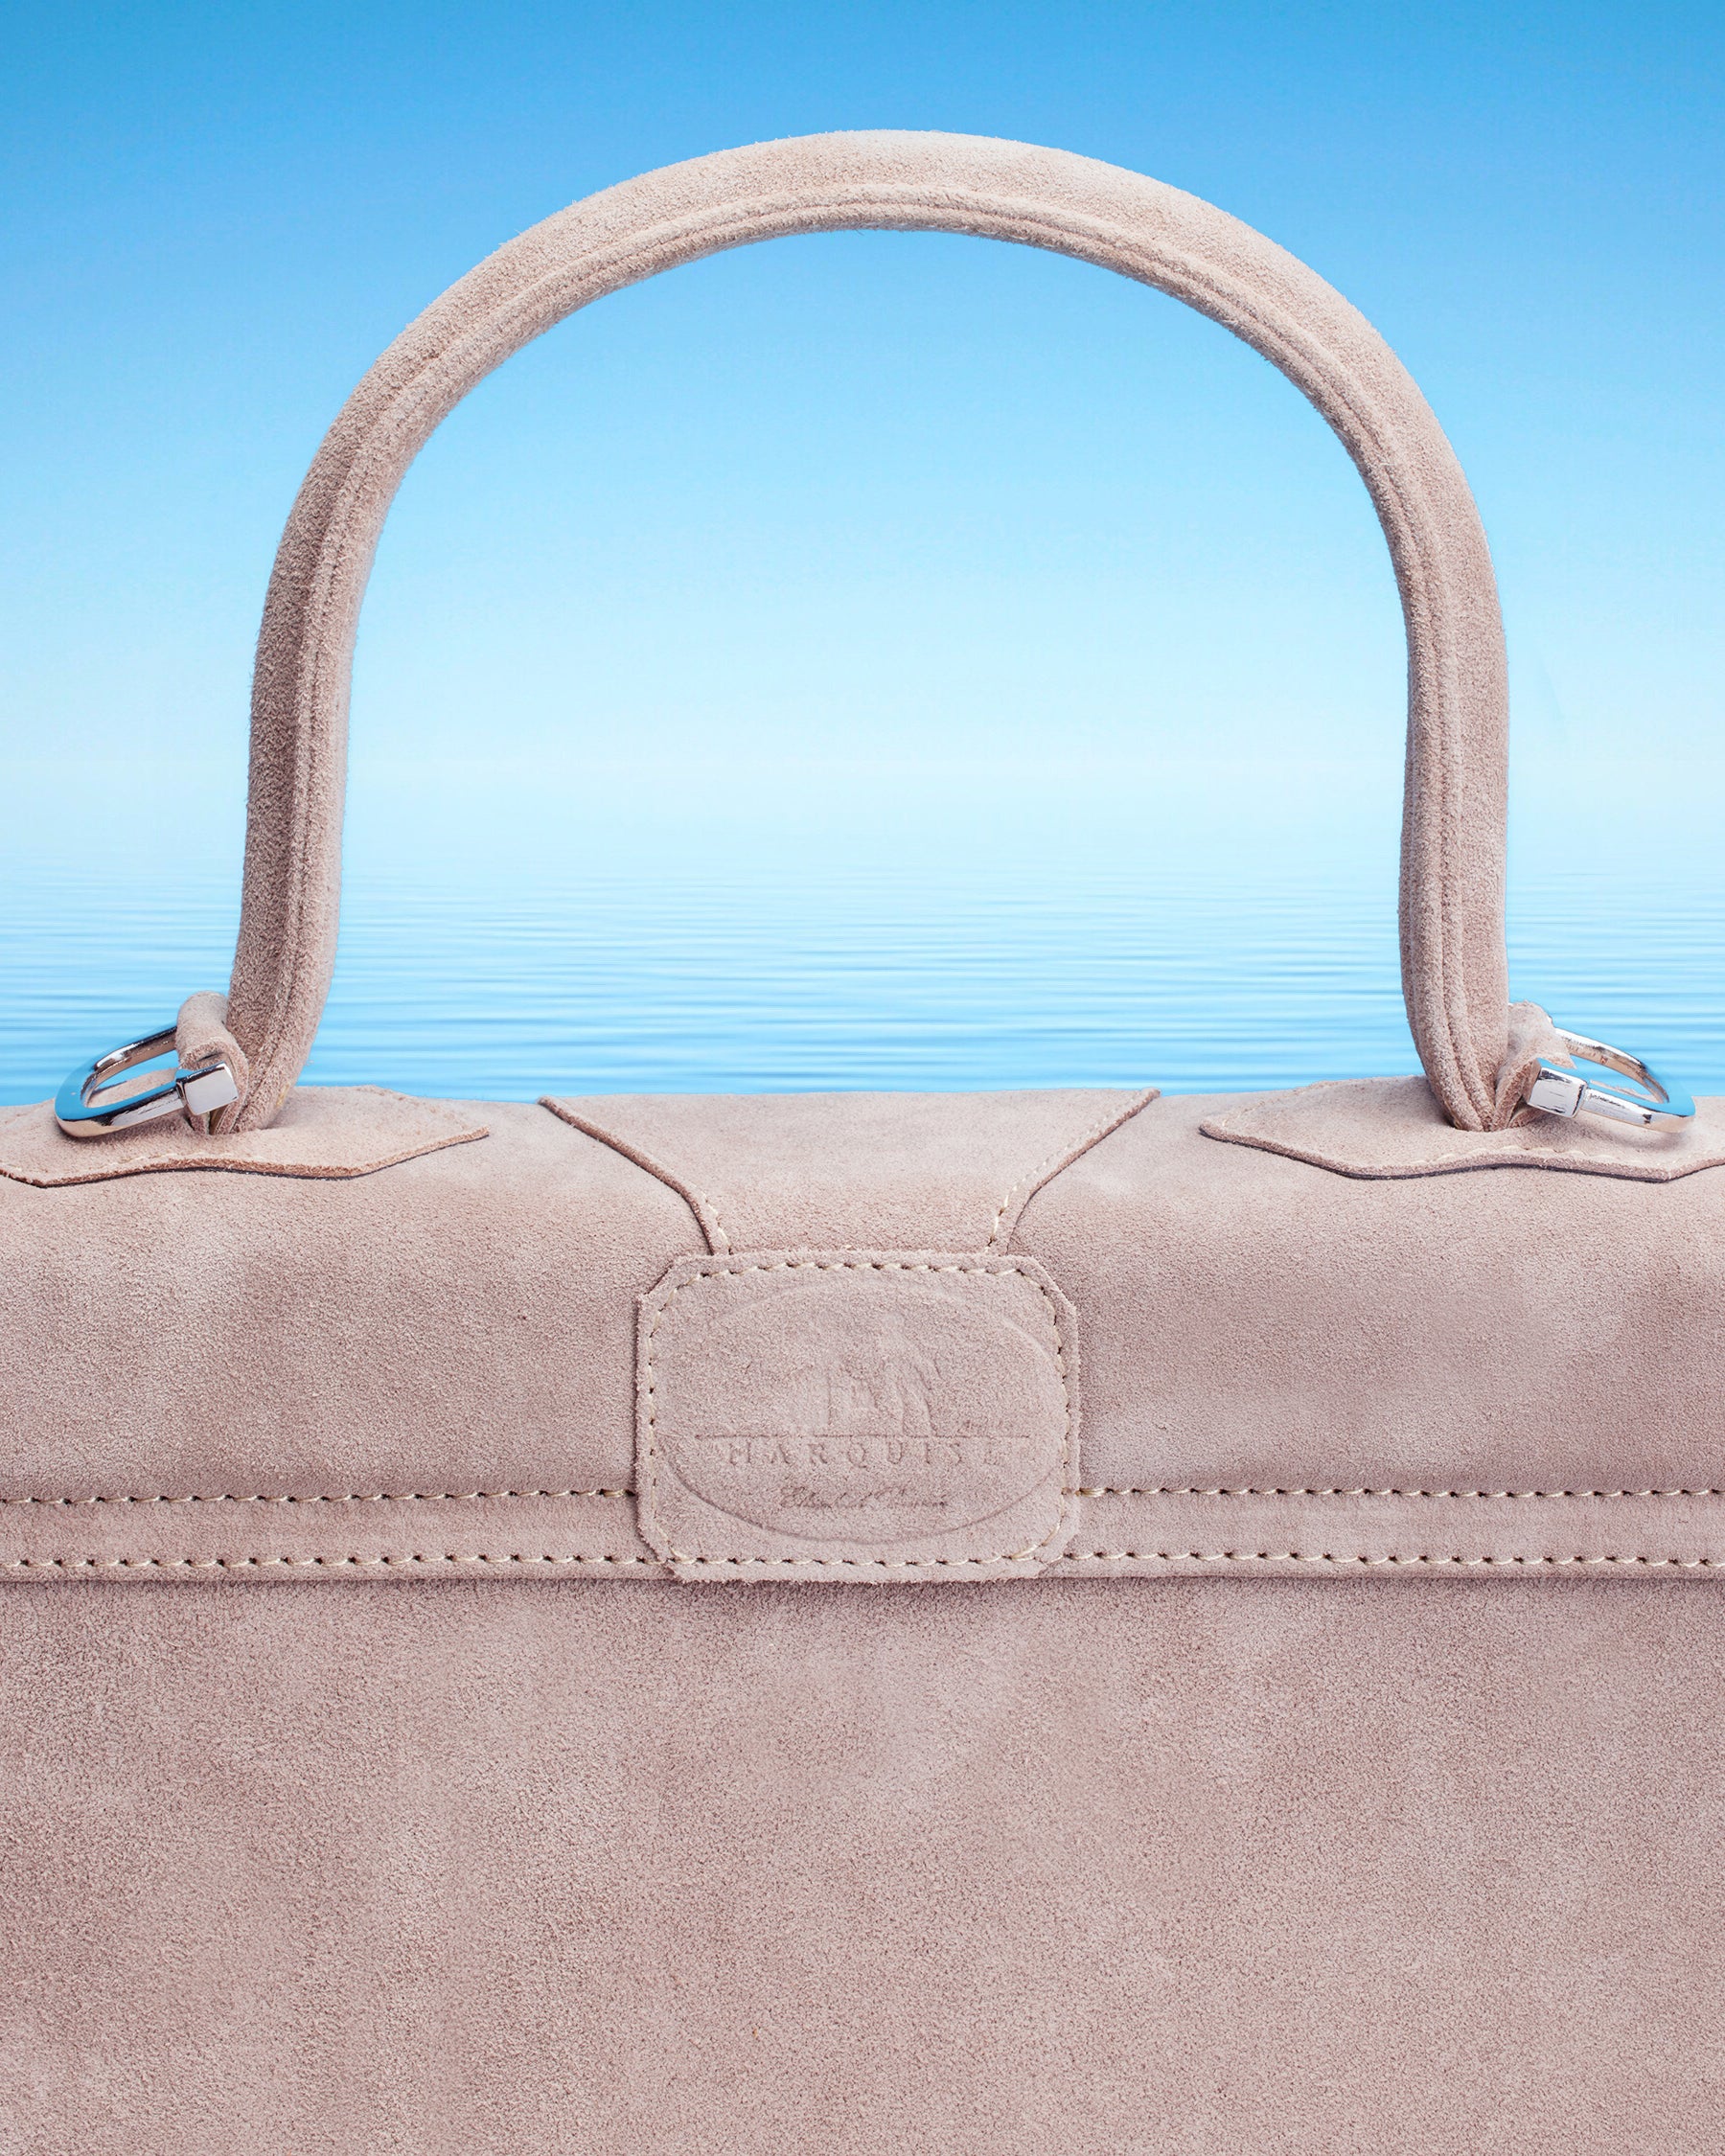 Marquise Paris Recontre Équestre Top Handle Shoulder Bag in Pastel Pink-Back View with Debossed Logo Detail